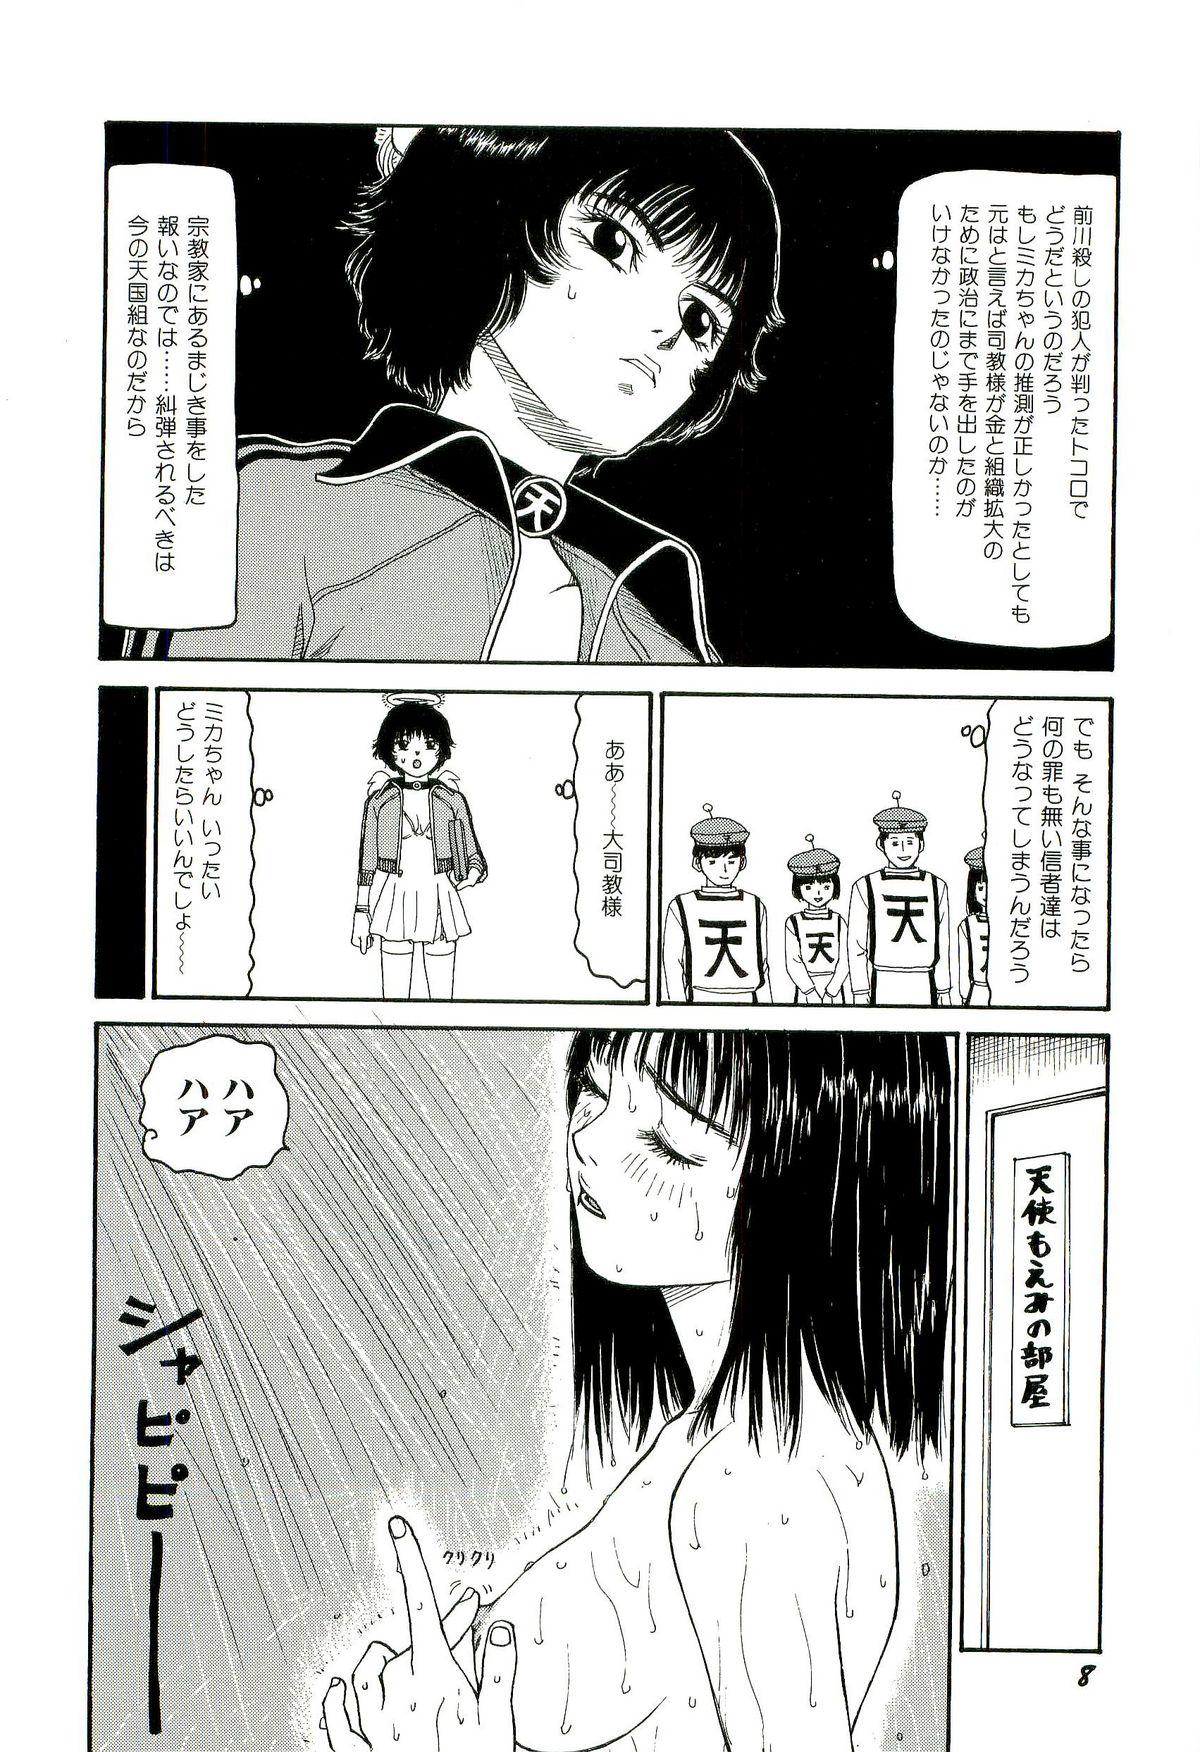 Roundass Jigokugumi no Onna 3 18yearsold - Page 9